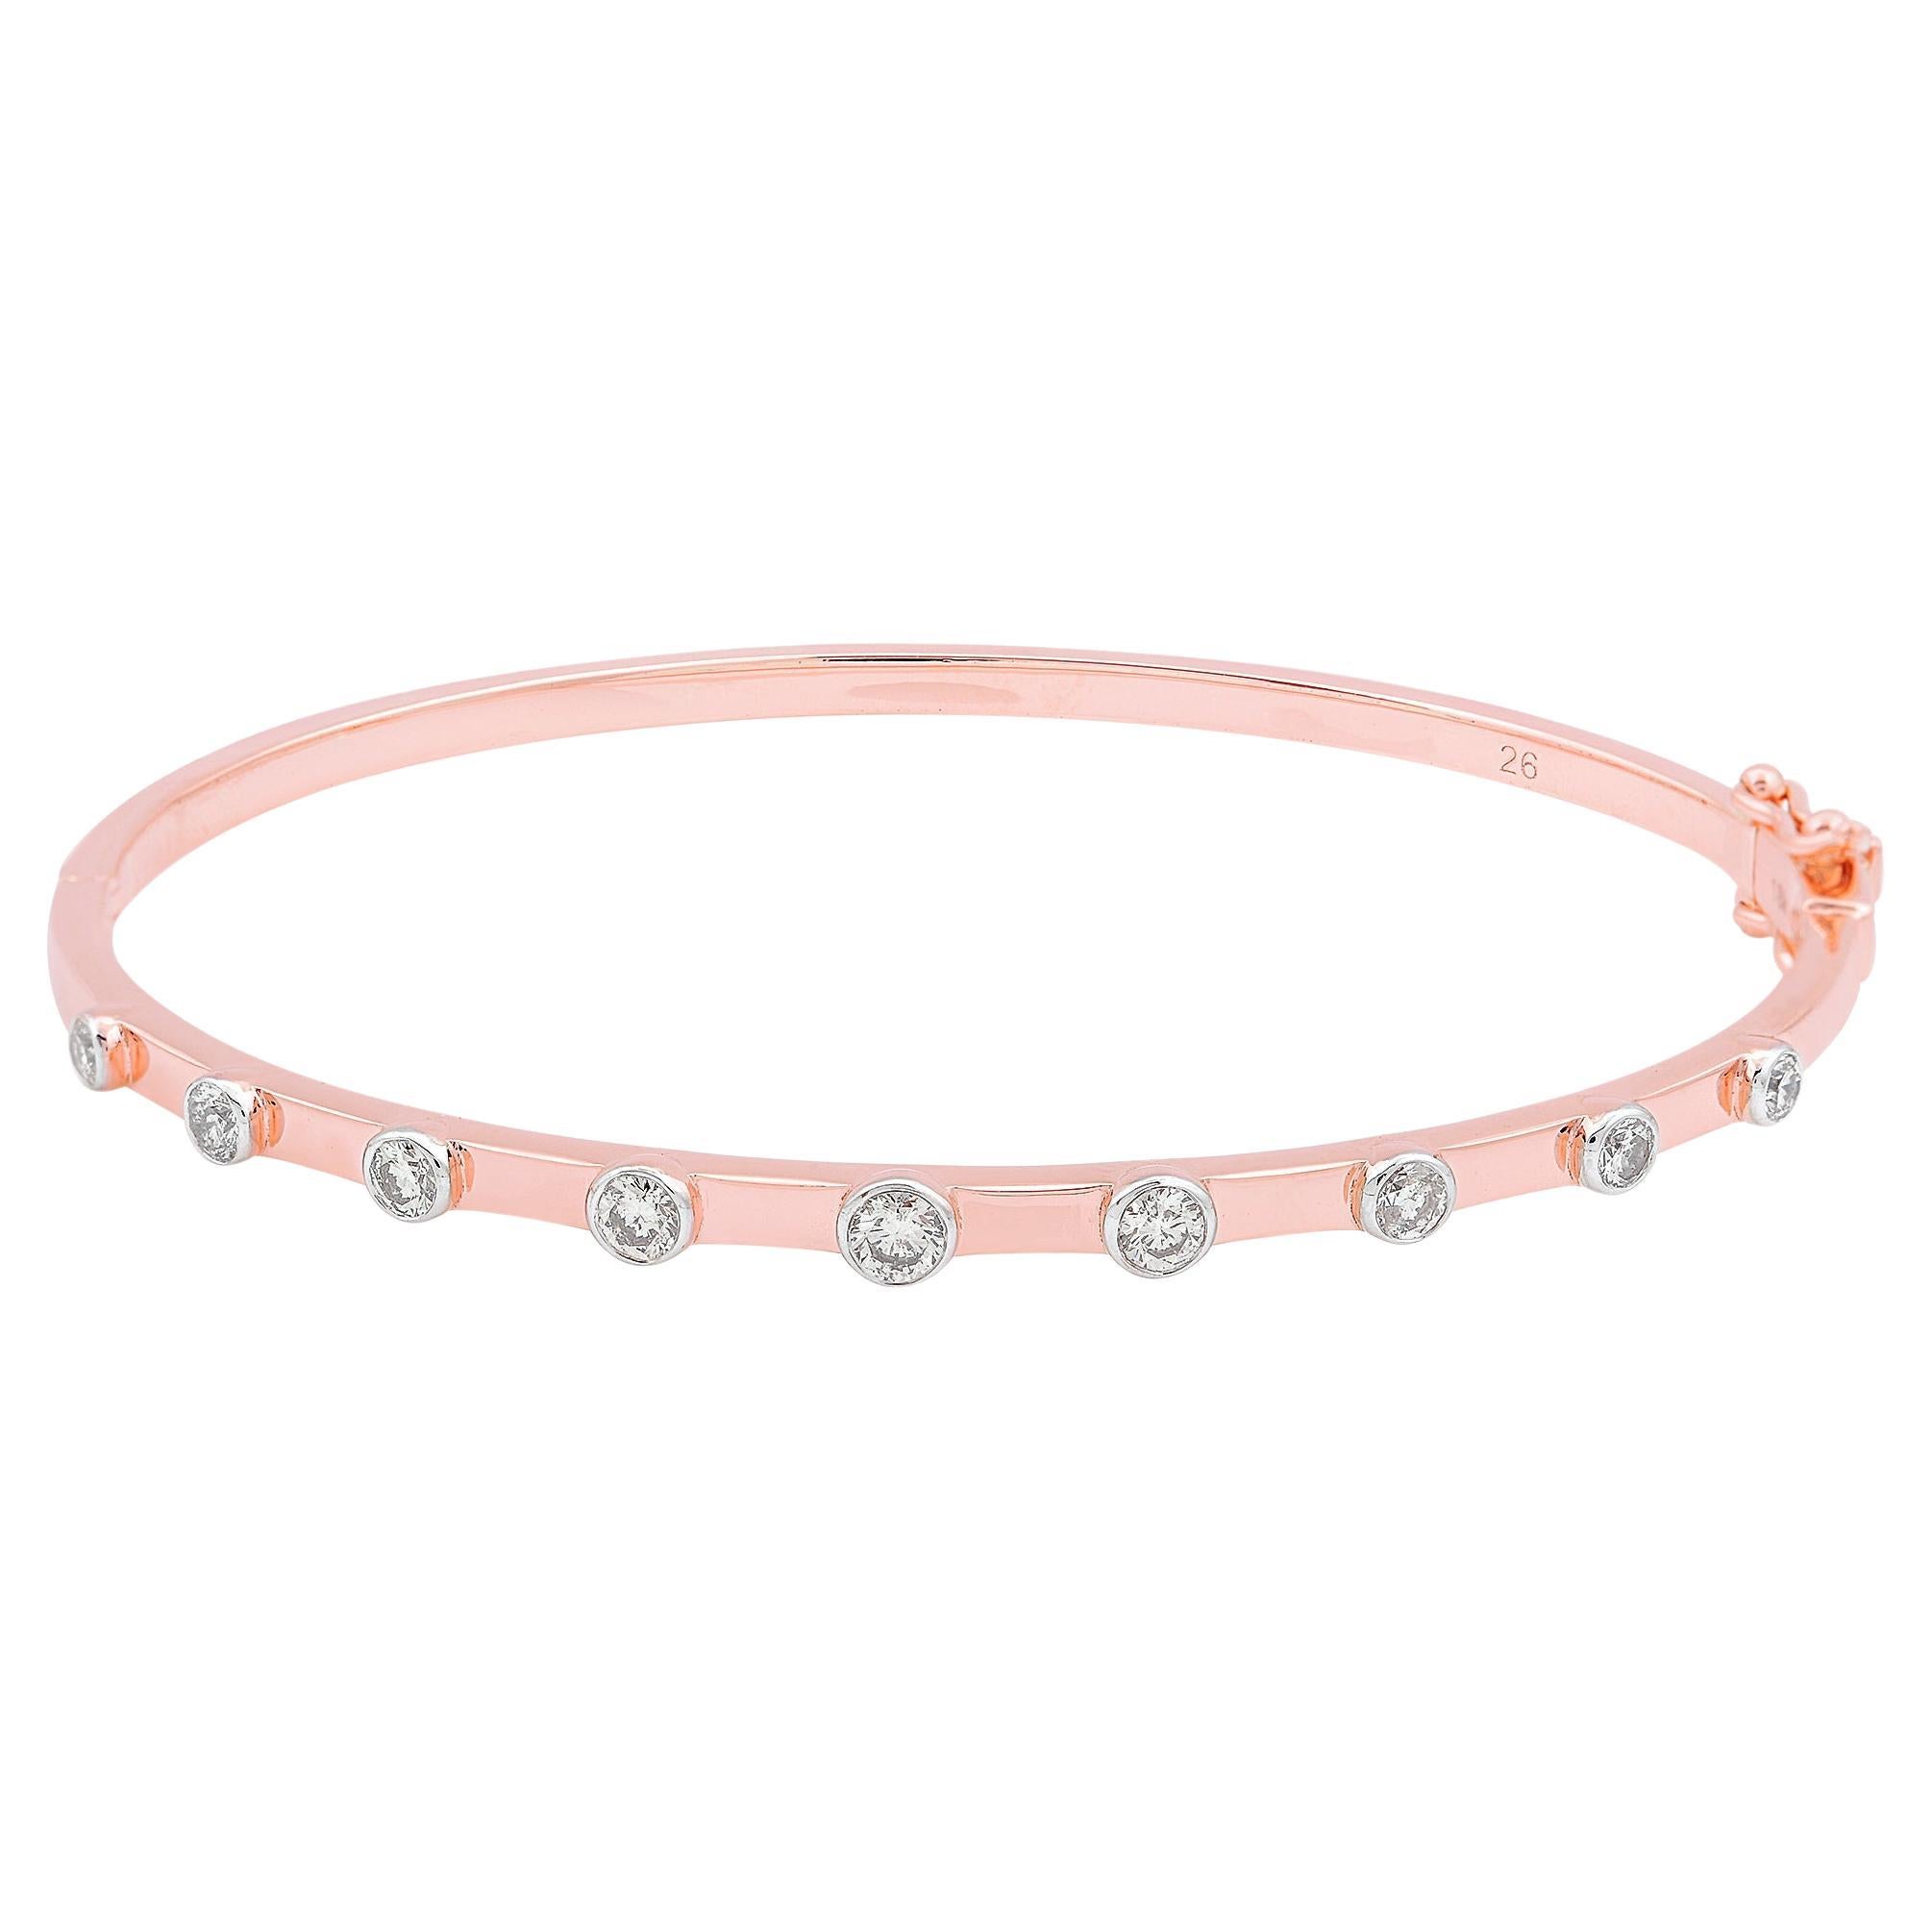 SI Clarity HI Color Round Diamond Bangle Bracelet 18 Karat Rose Gold Jewelry For Sale